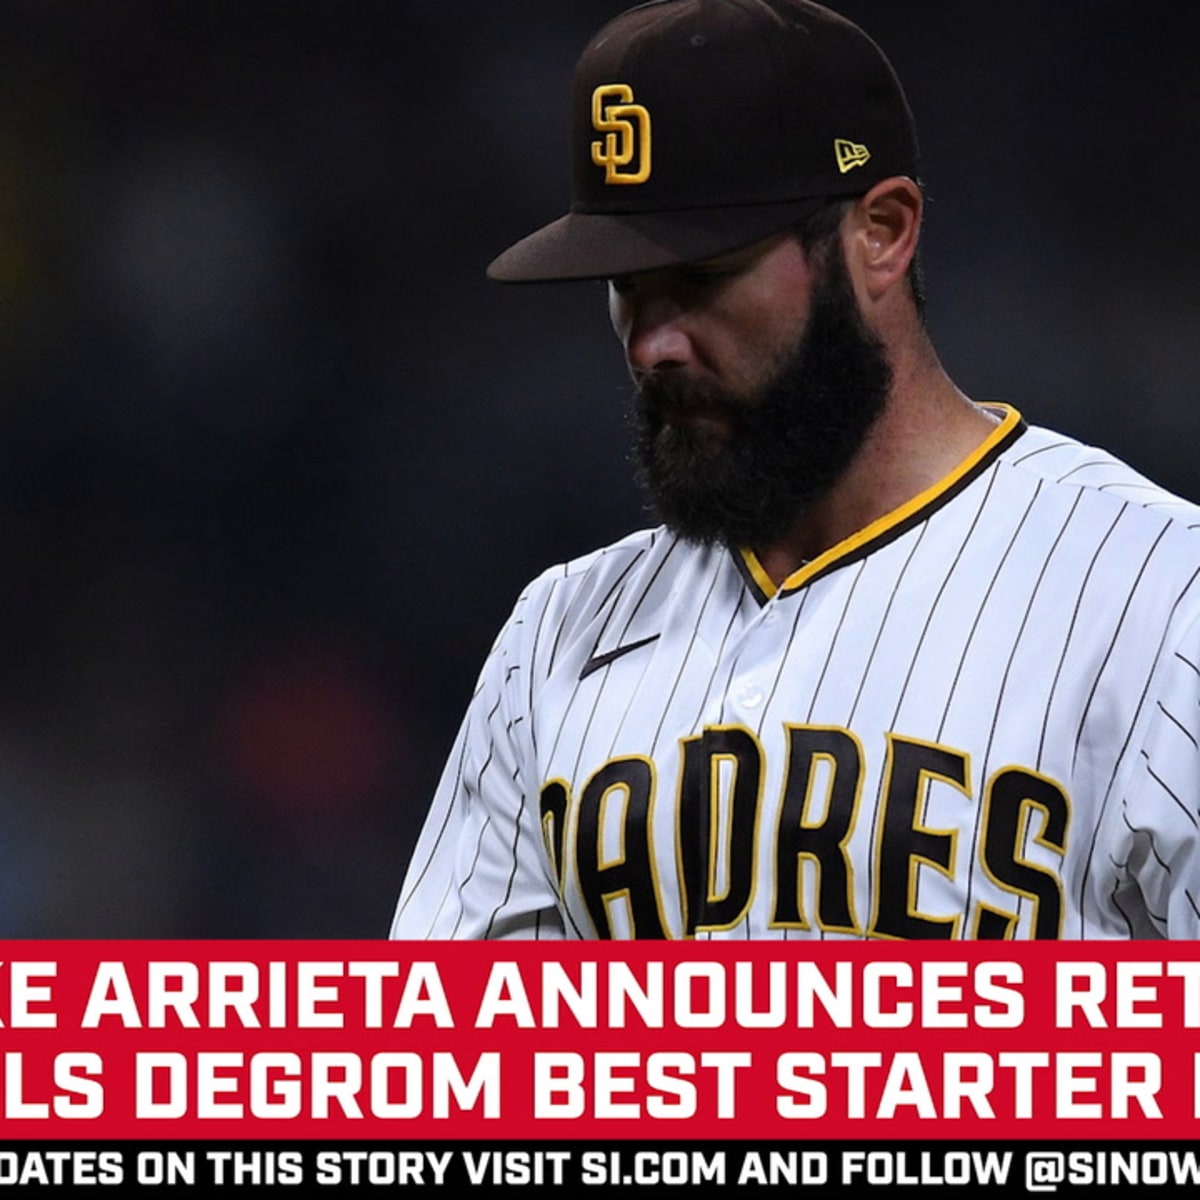 Jake Arrieta announces retirement from baseball after 12 seasons